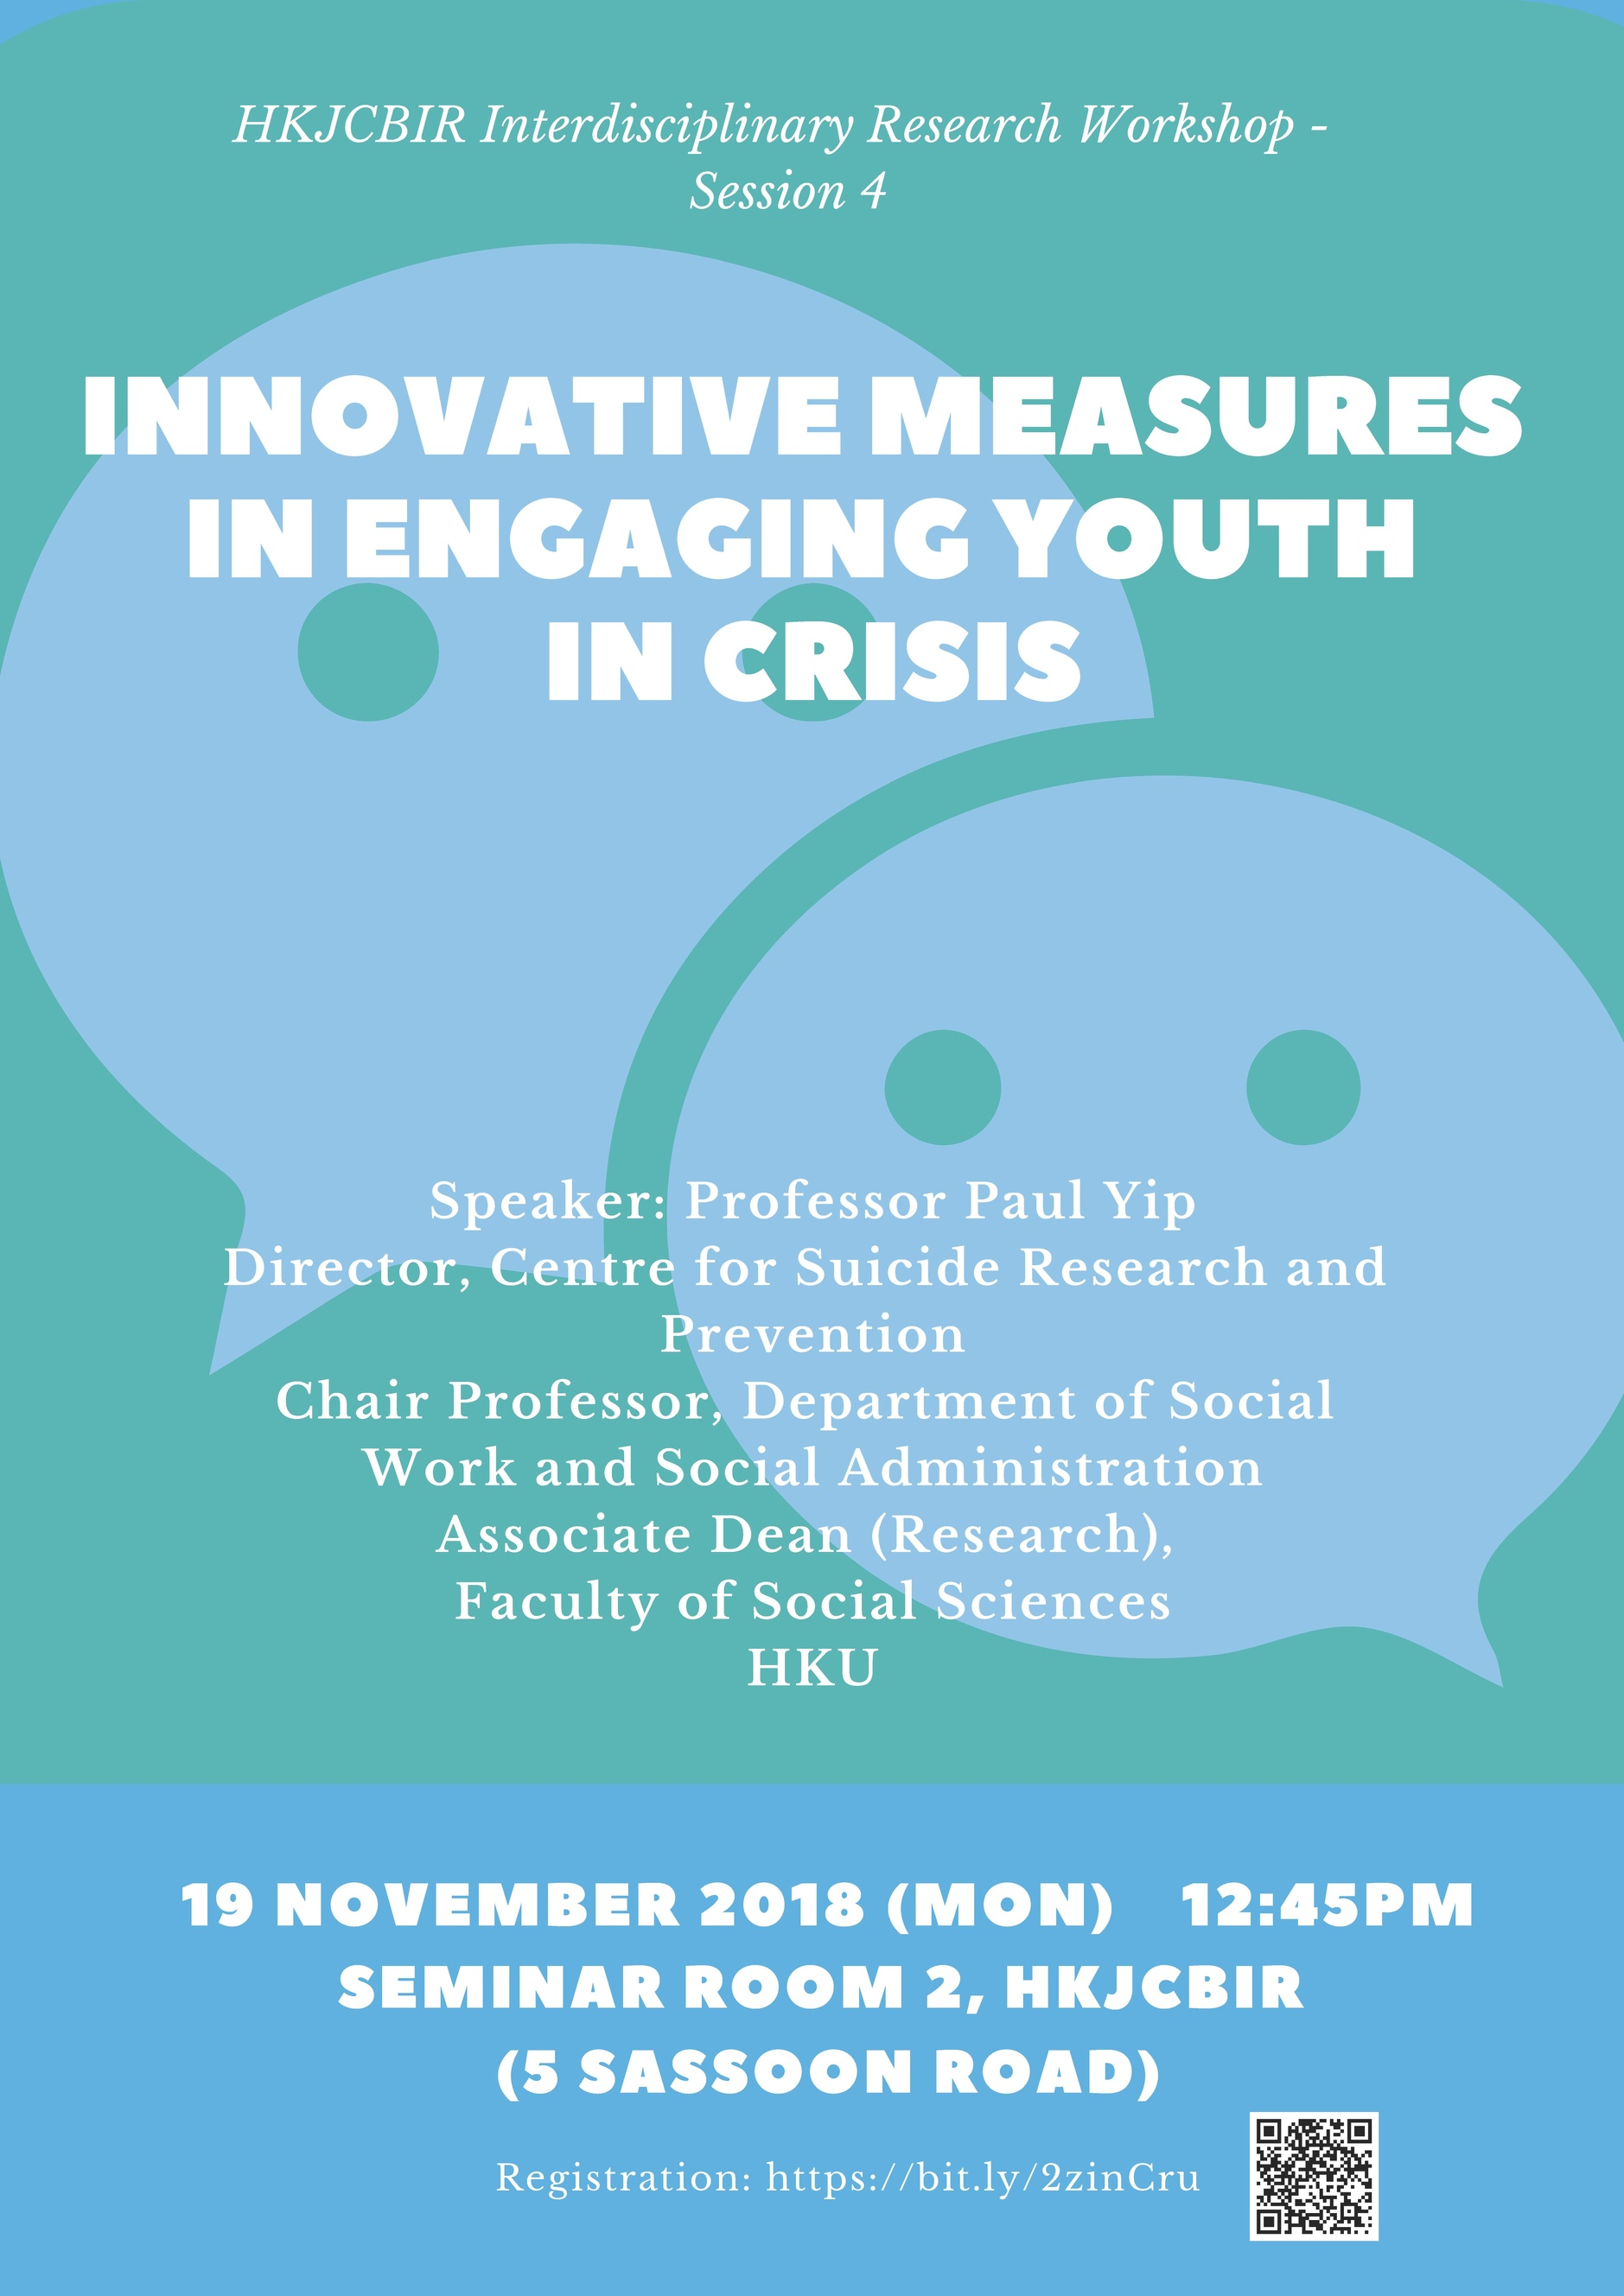 HKJCBIR Interdisciplinary Research Workshop Series (4) - 19 Nov 2018